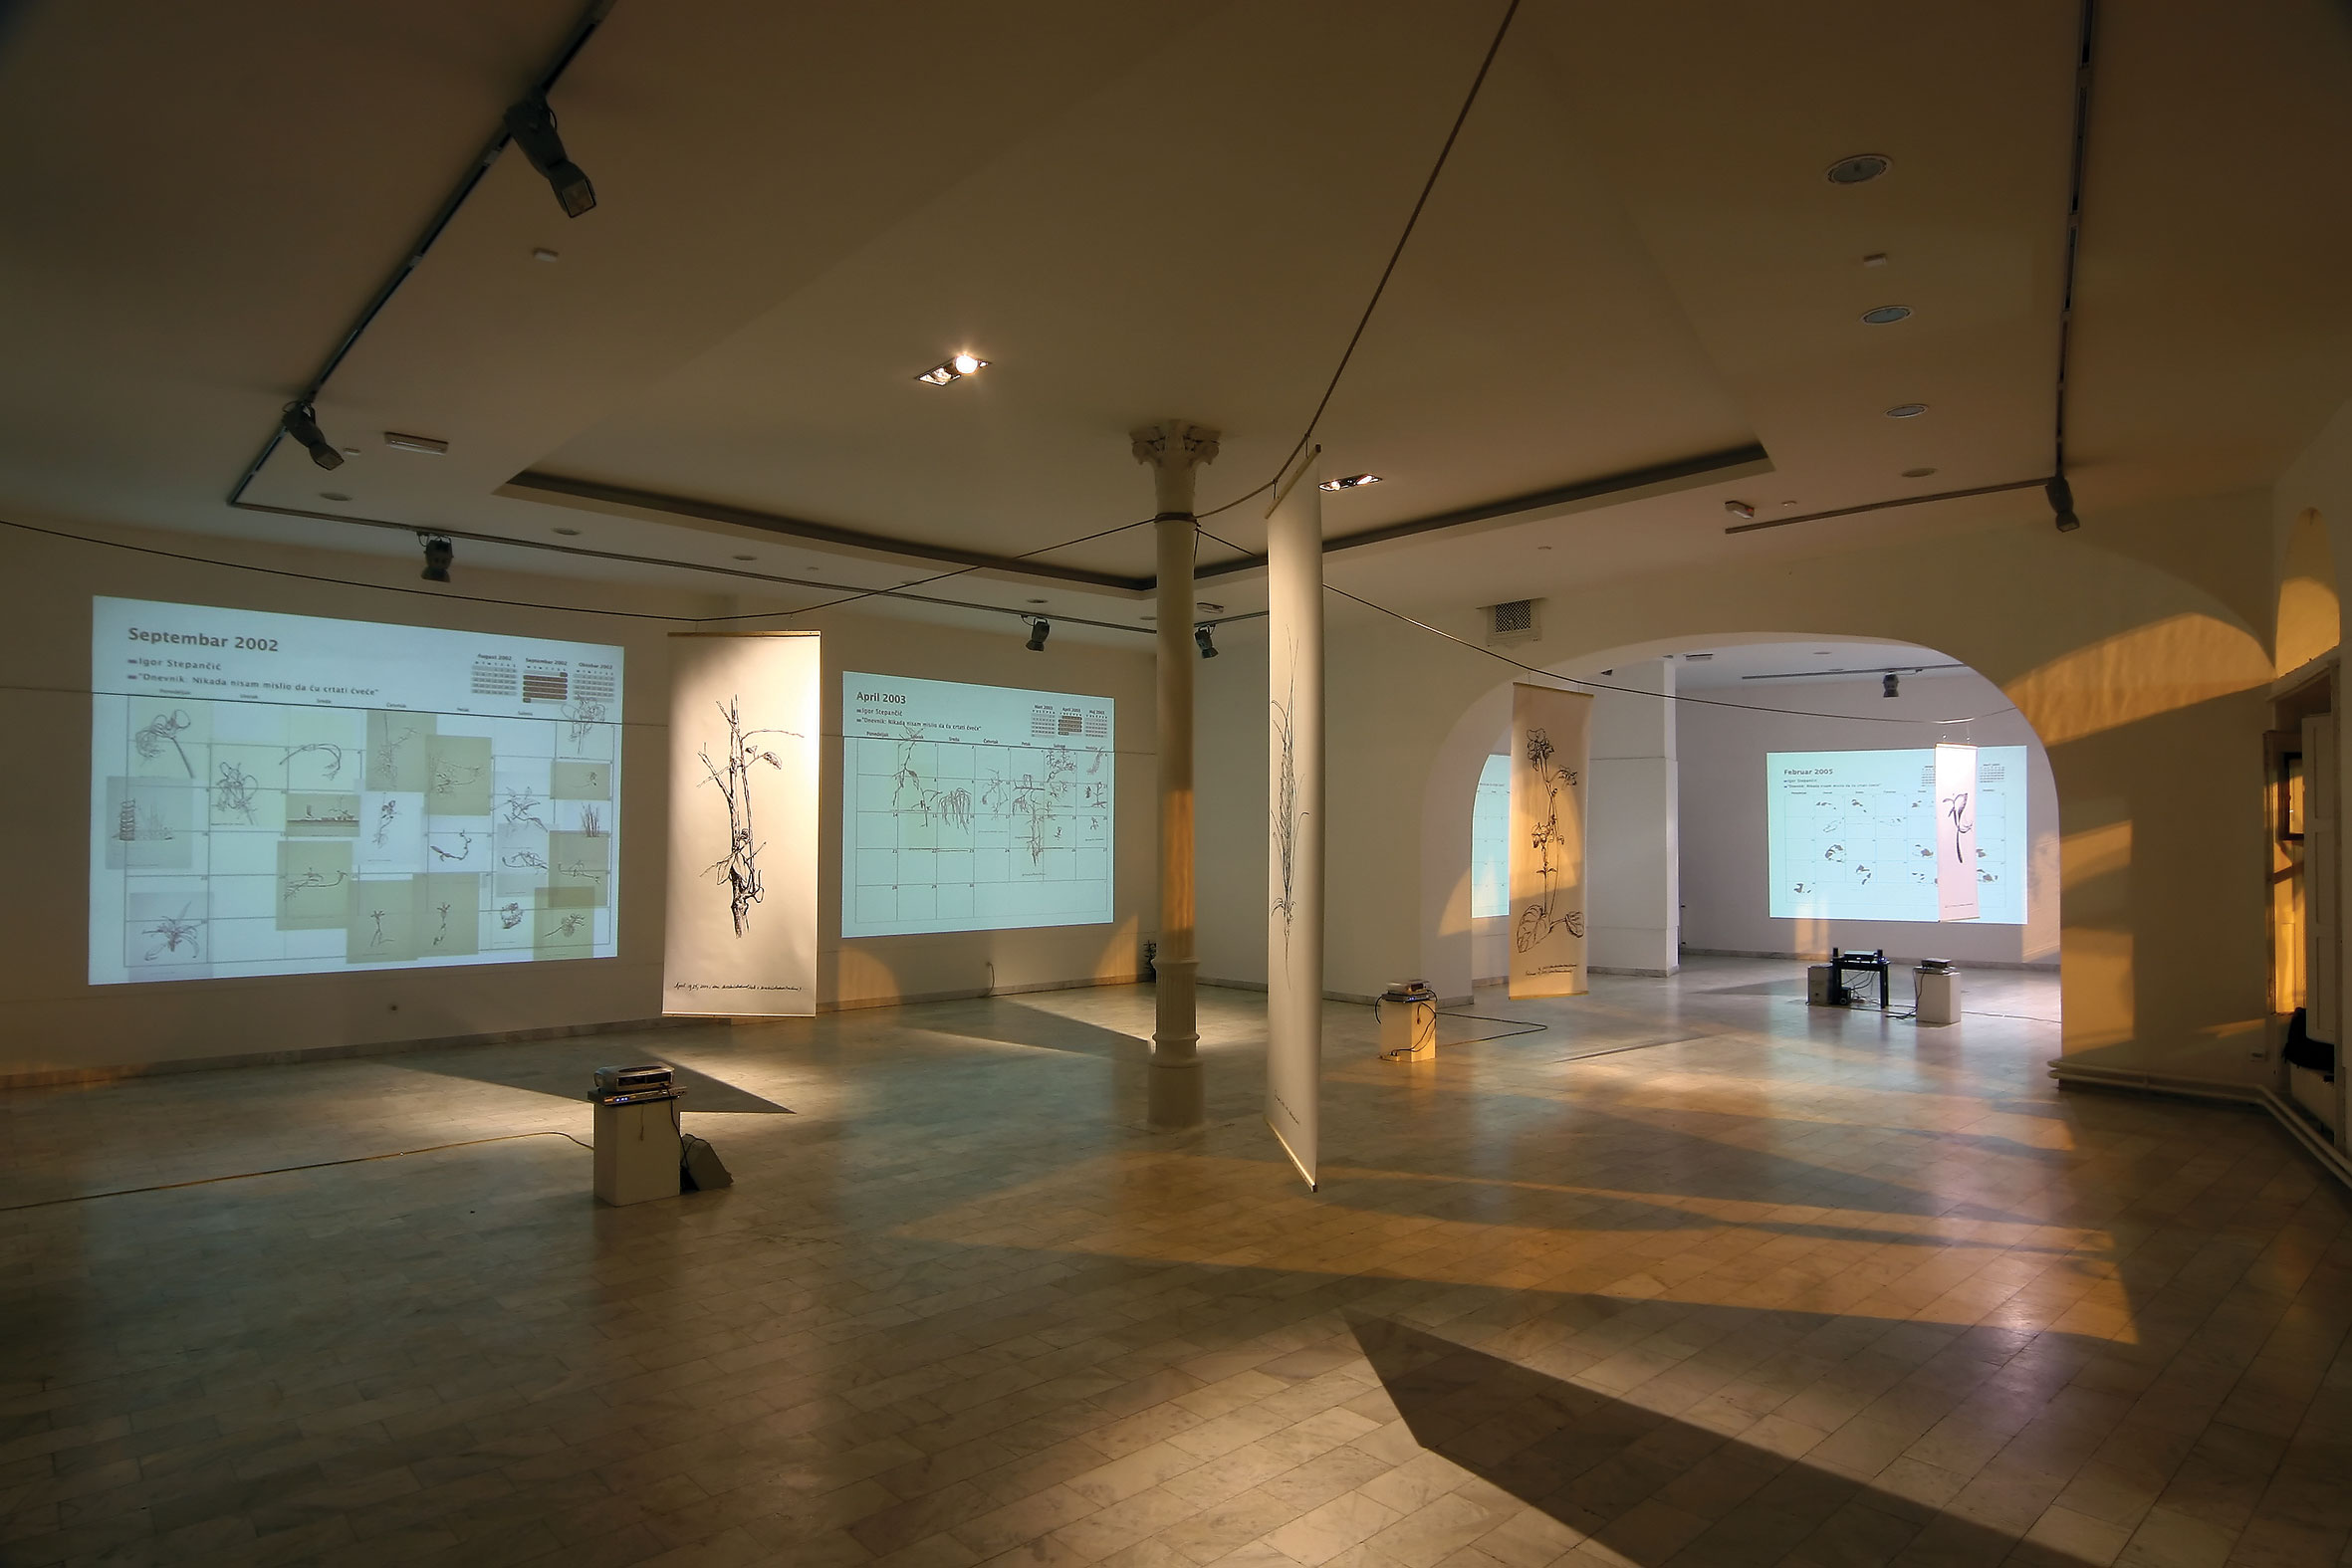 Galerija savremene umetnosti Pancevo installation view